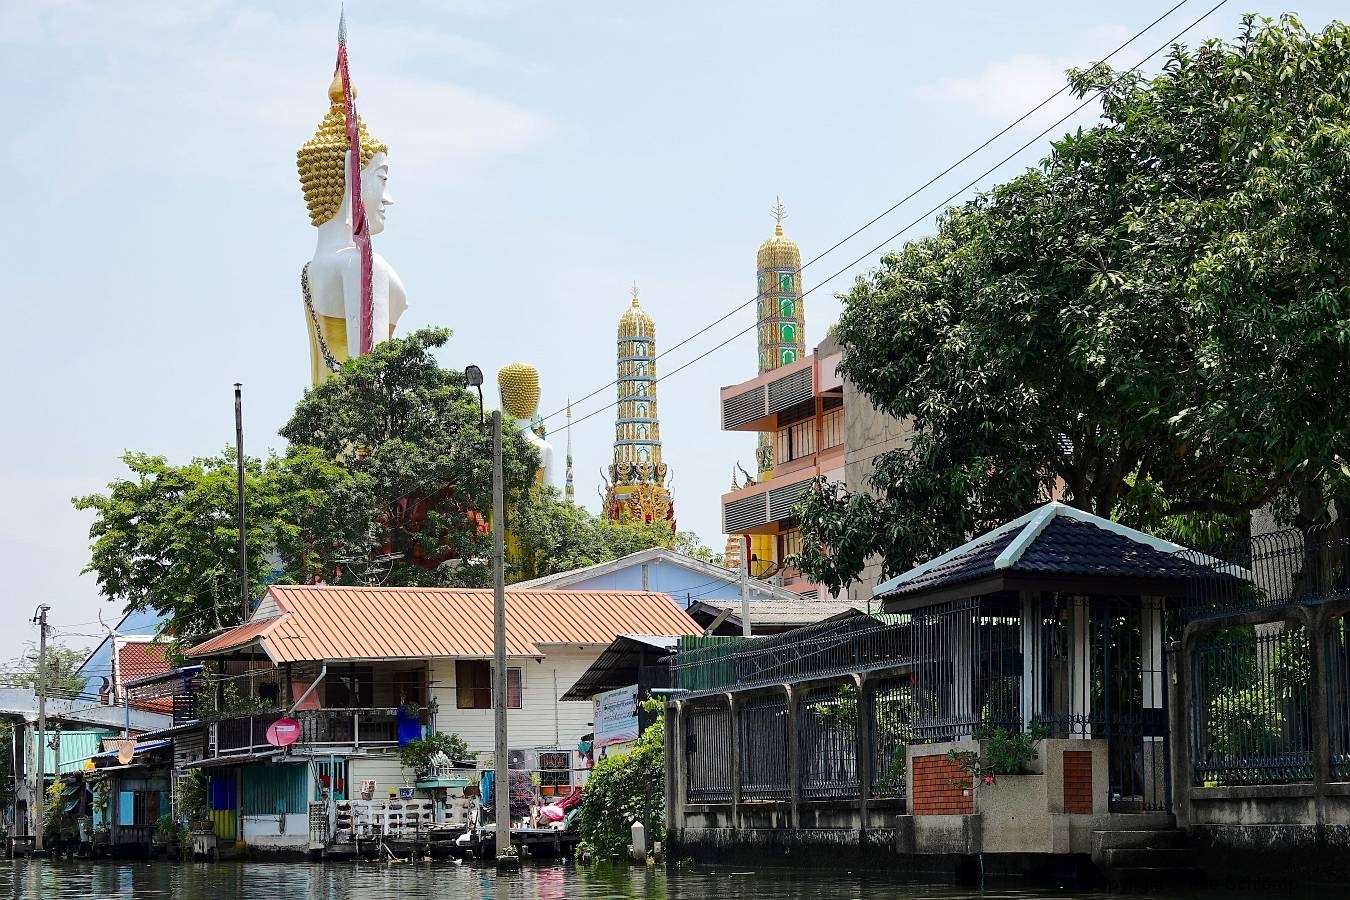 Thailand, Bangkok, Khlongfahrt